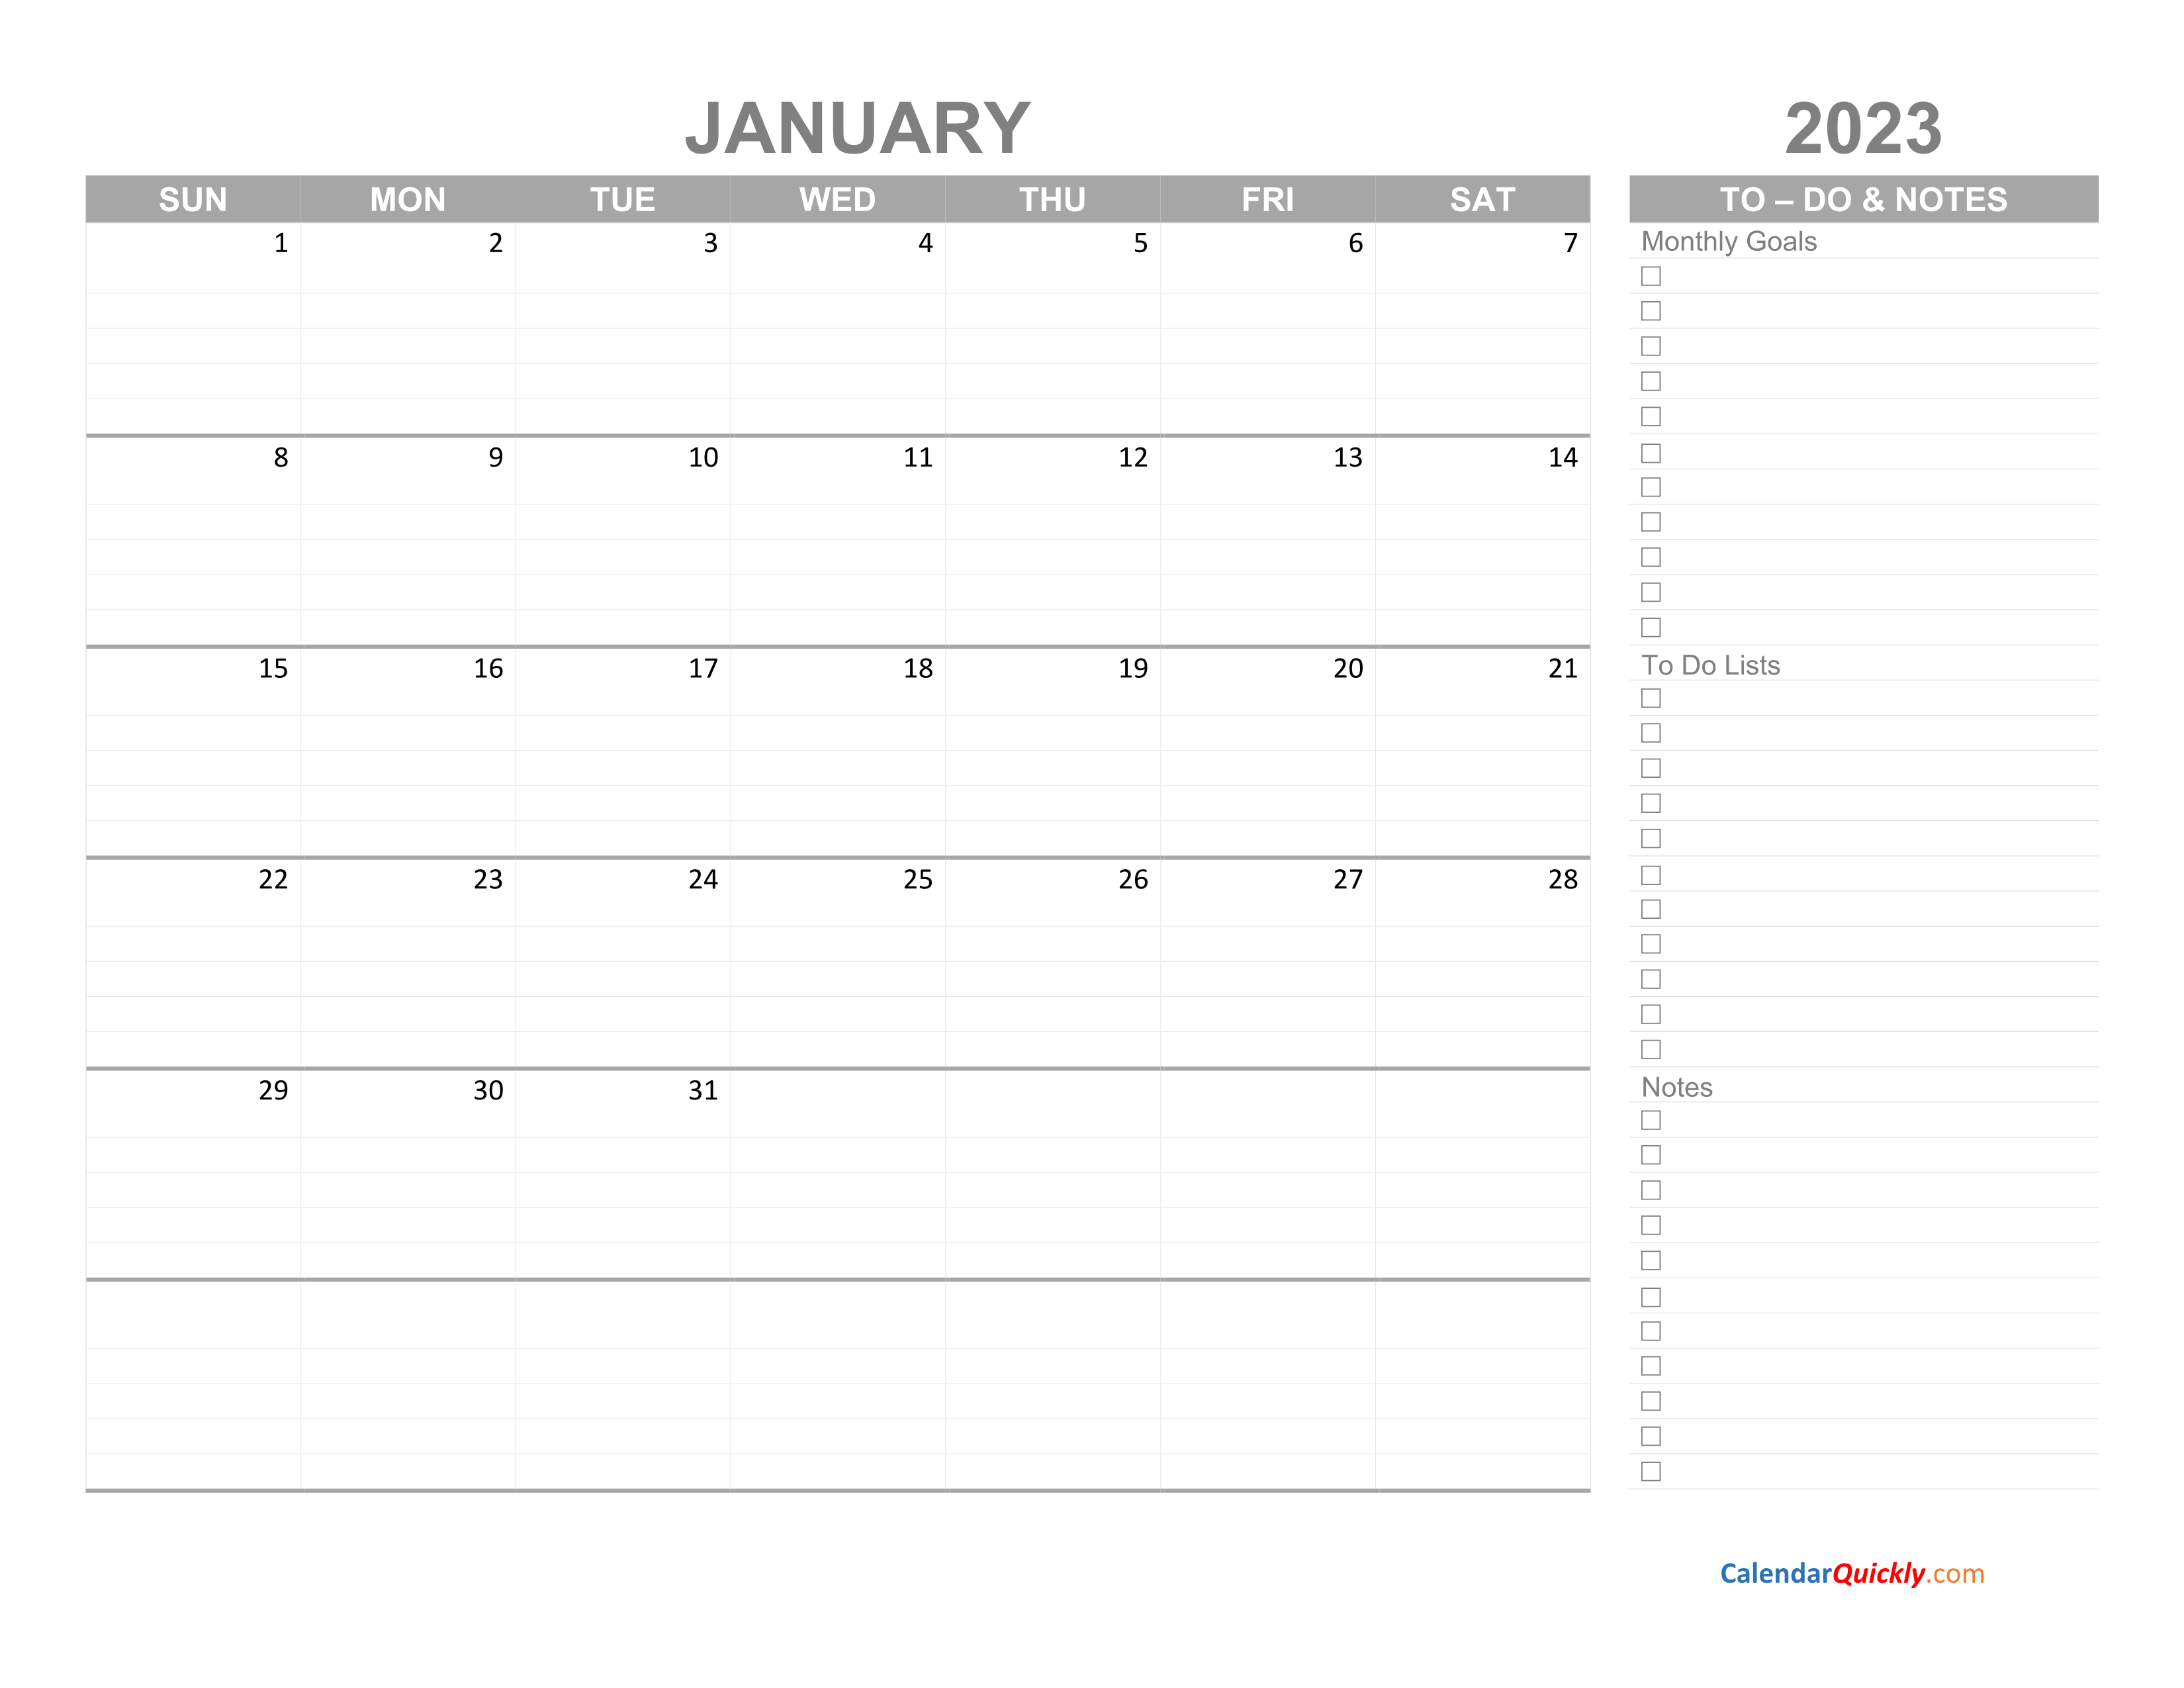 January 2023 Calendar with ToDo List Calendar Quickly